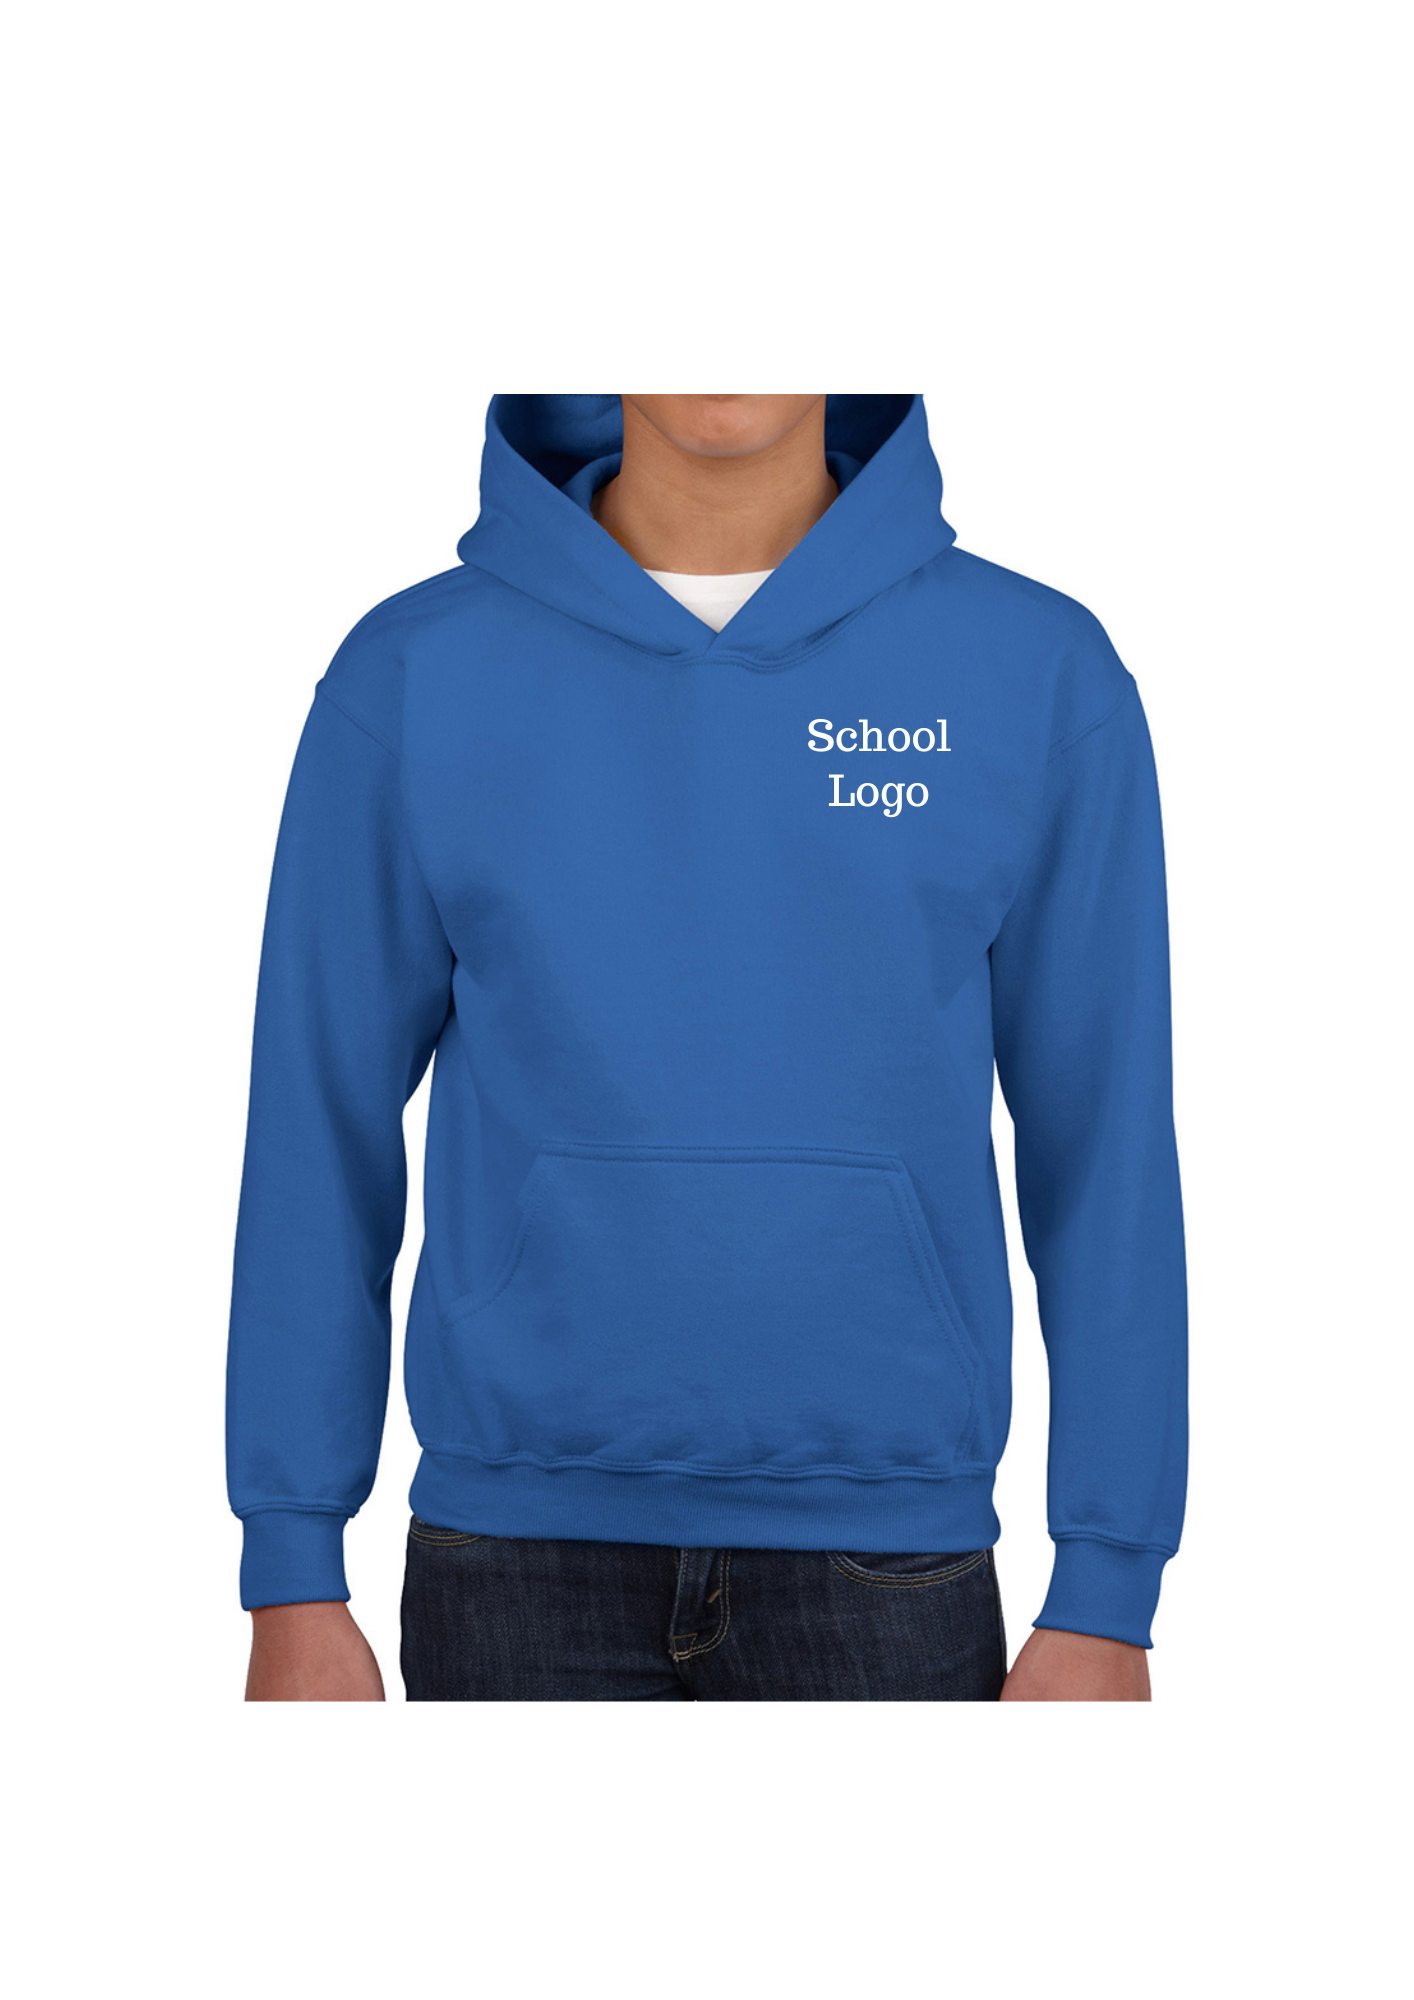 Southbroom St James Hooded Sweatshirt